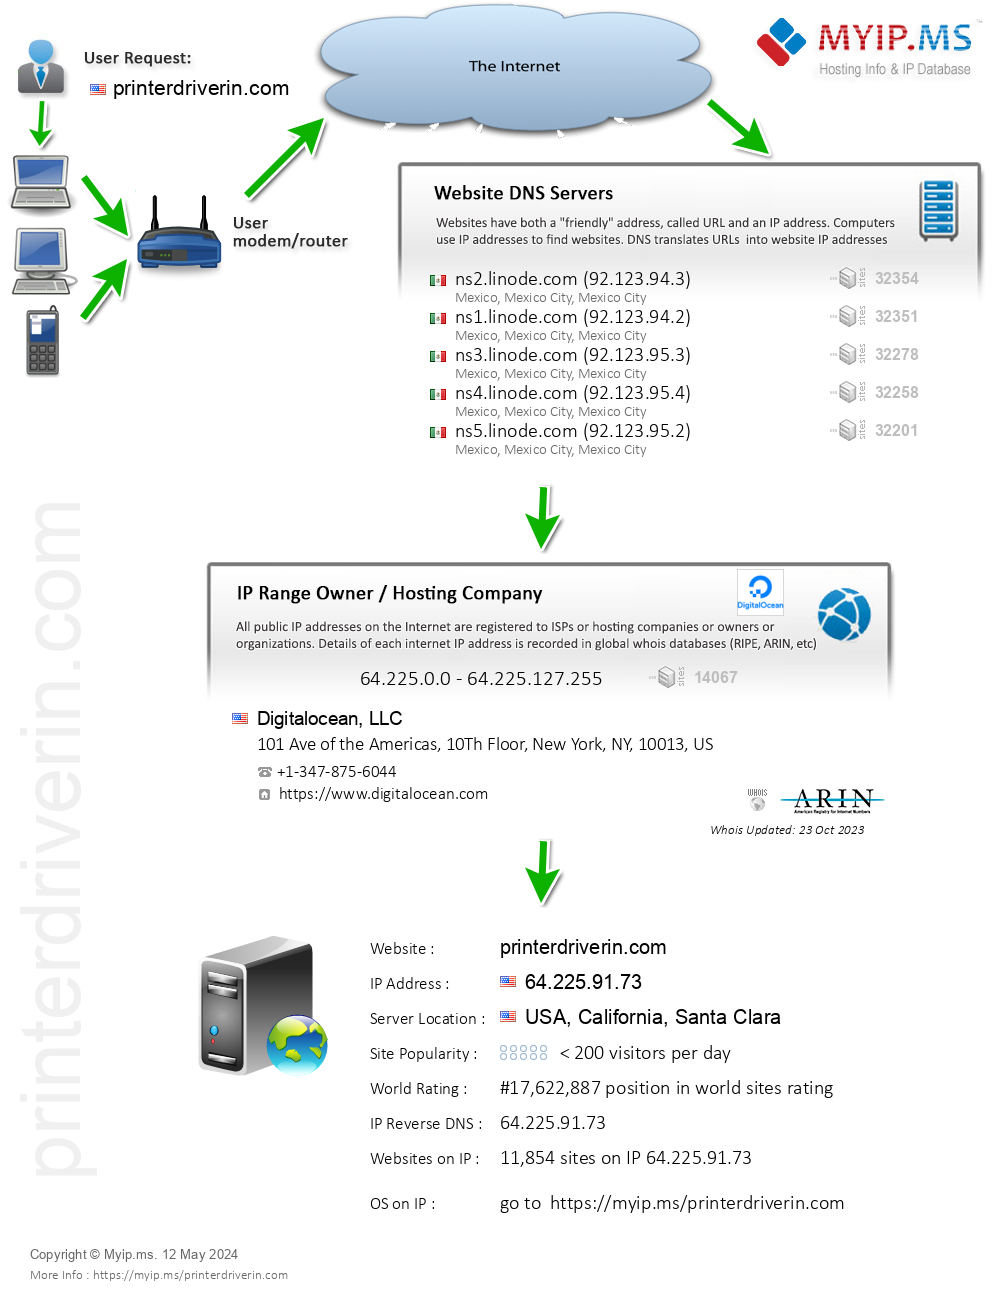 Printerdriverin.com - Website Hosting Visual IP Diagram